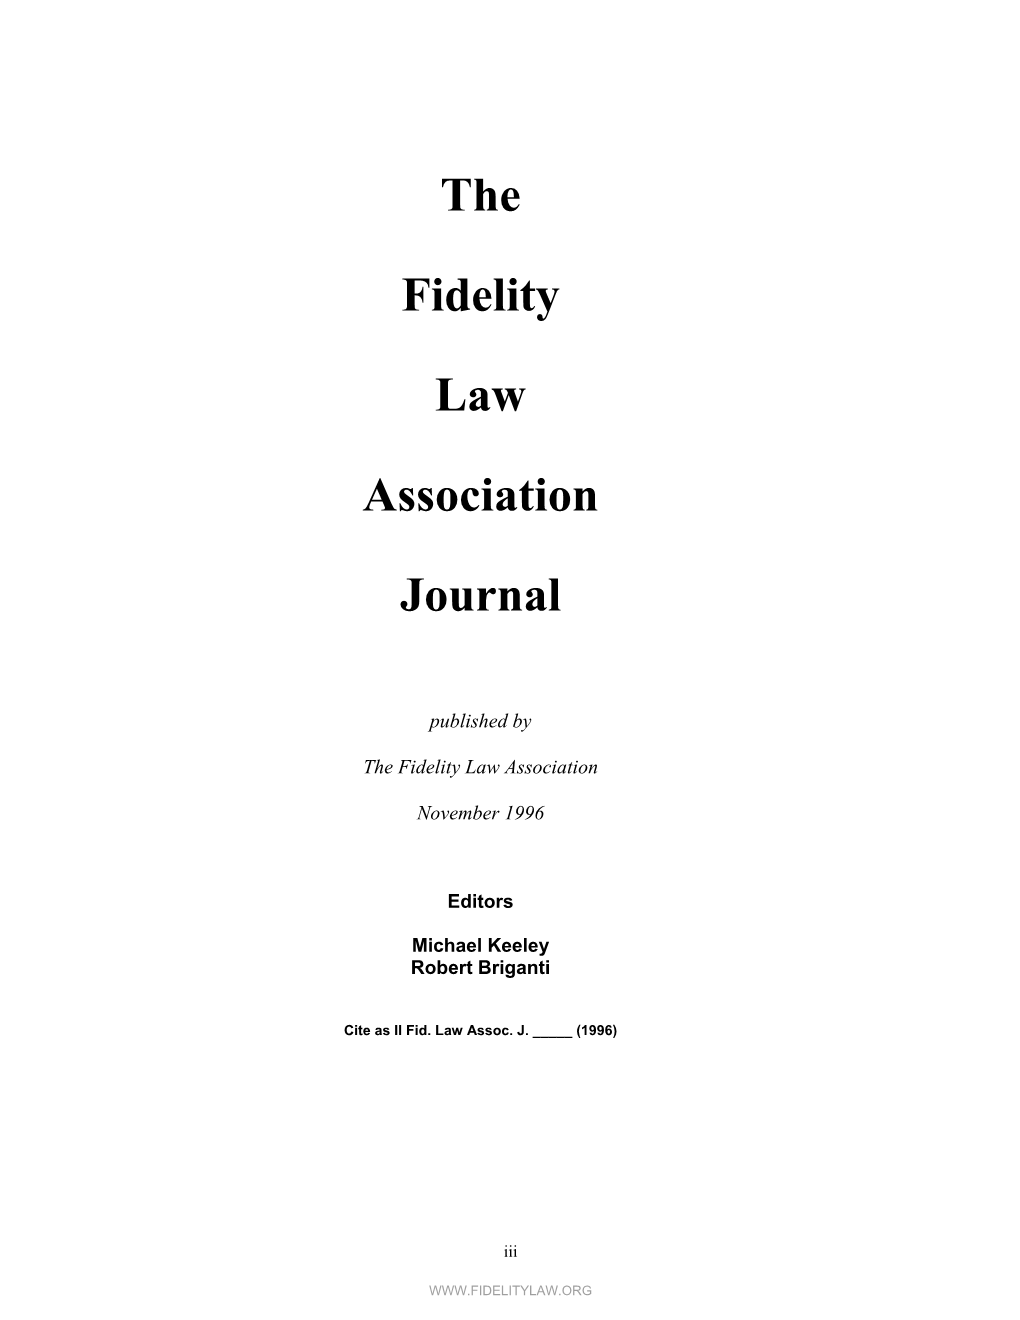 The Fidelity Law Association Journal